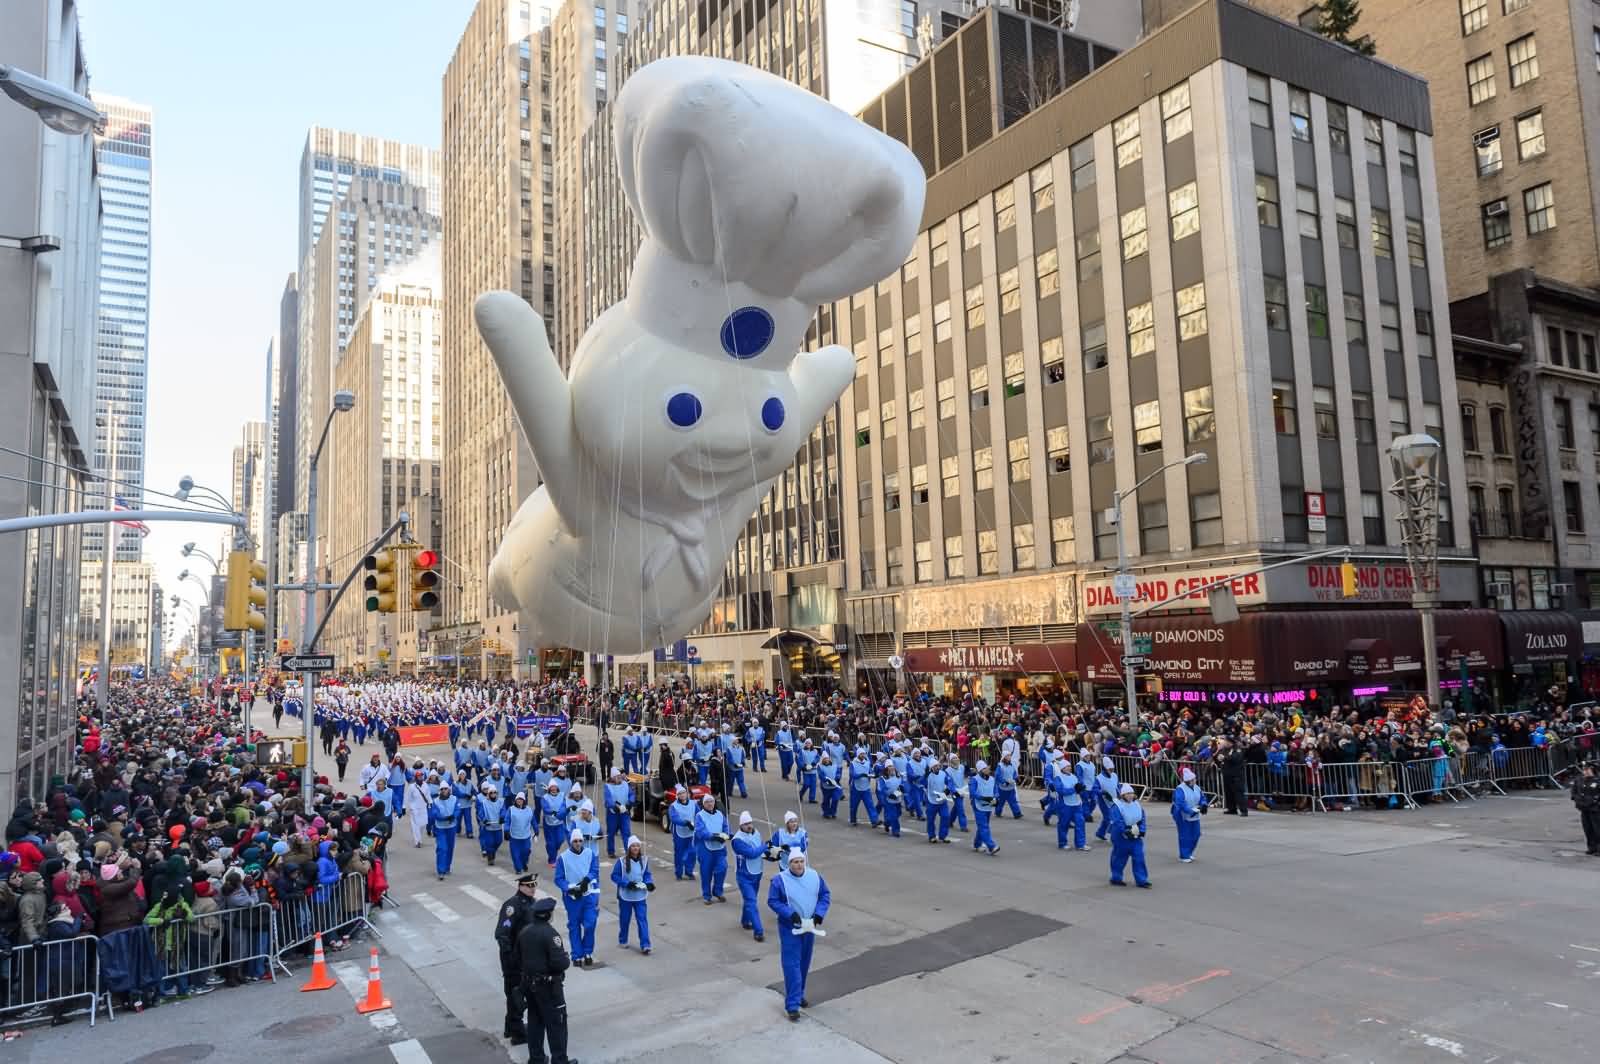 Pillsbury Doughboy Balloon At Macy's Thanksgiving Day Parade